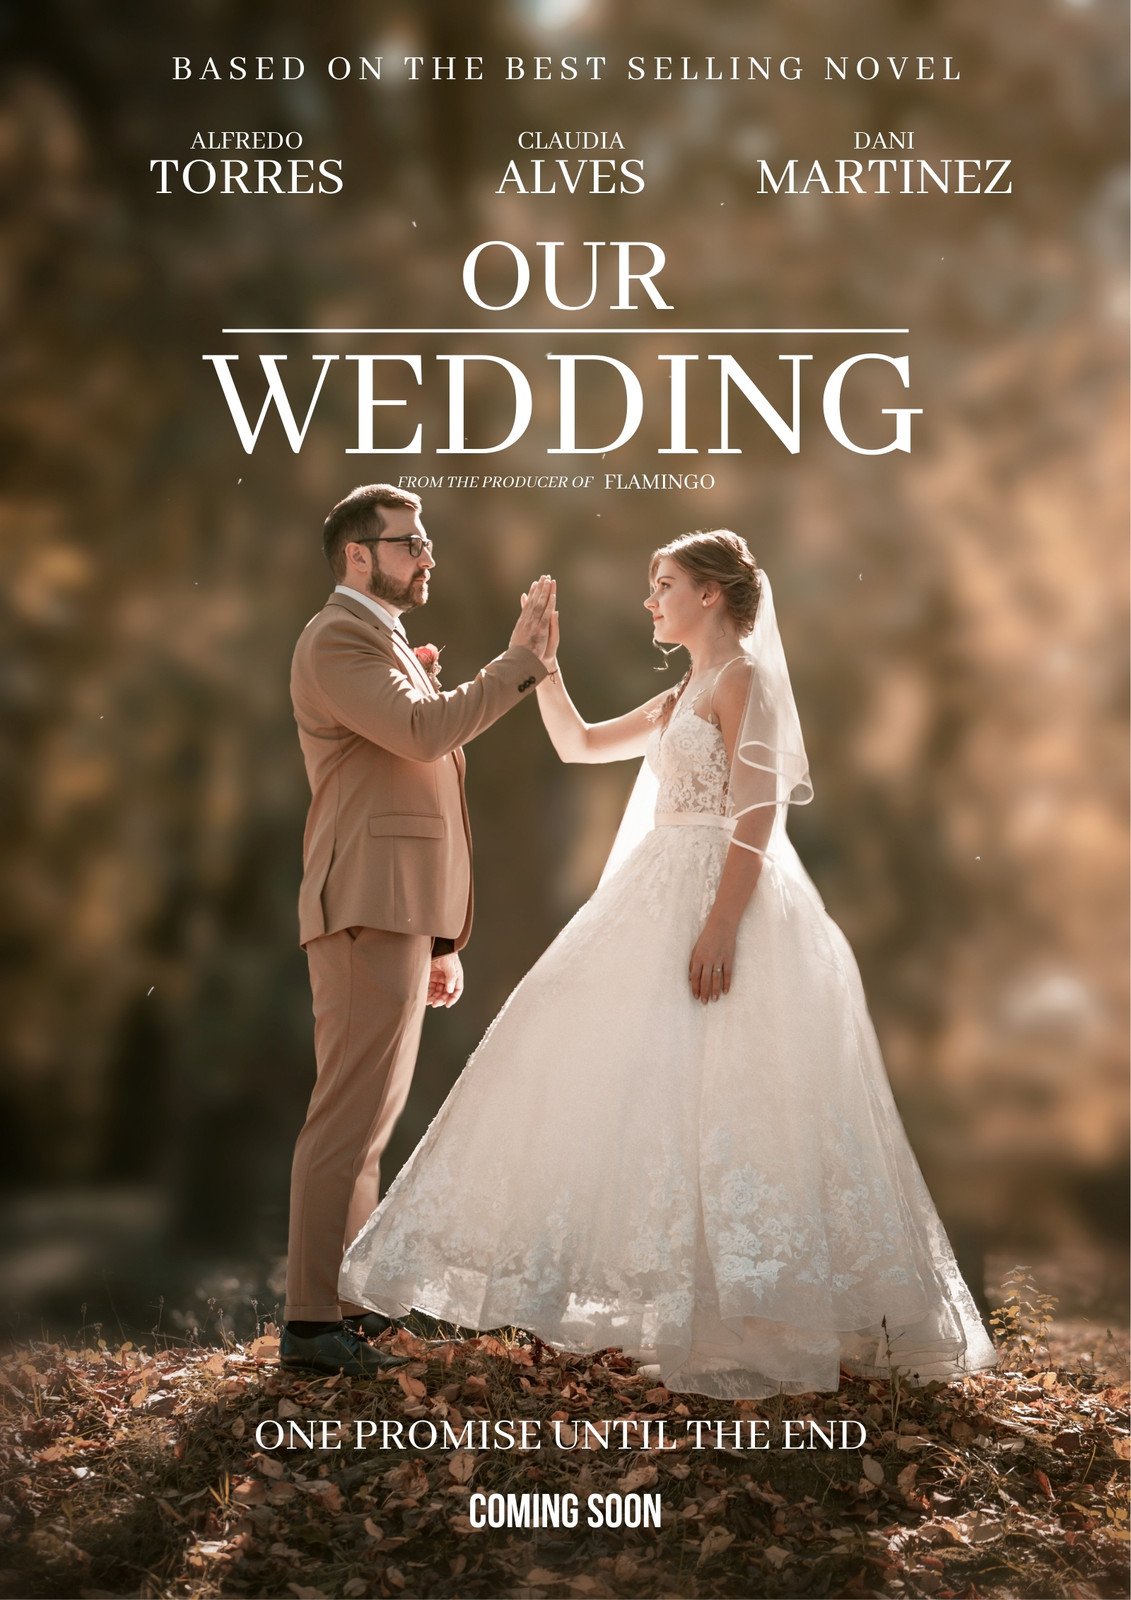 Brown White Simple Romantic Wedding Documentary Movie Poster